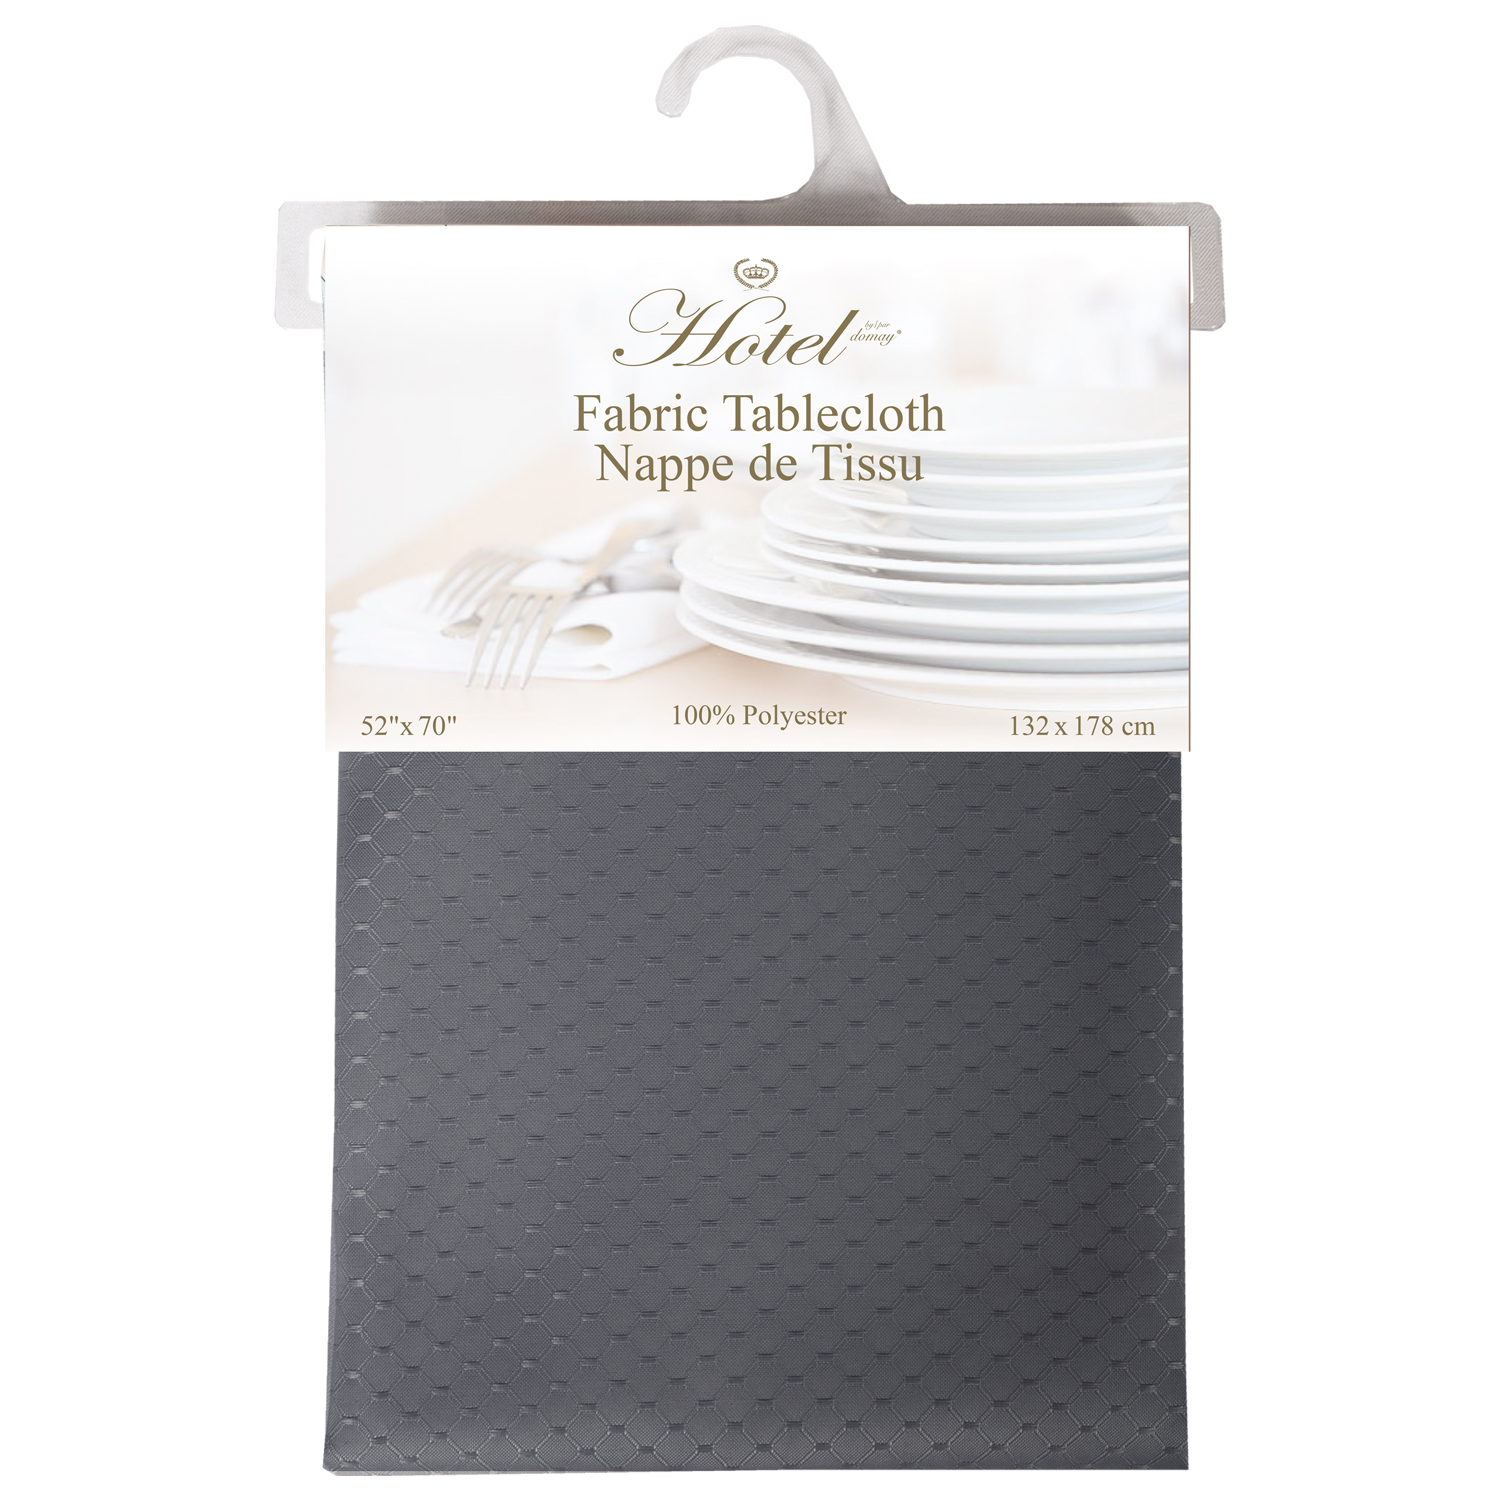 CHELTON collection - Jacquard fabric table cloth, 52"x70"- Dark grey honeycomb